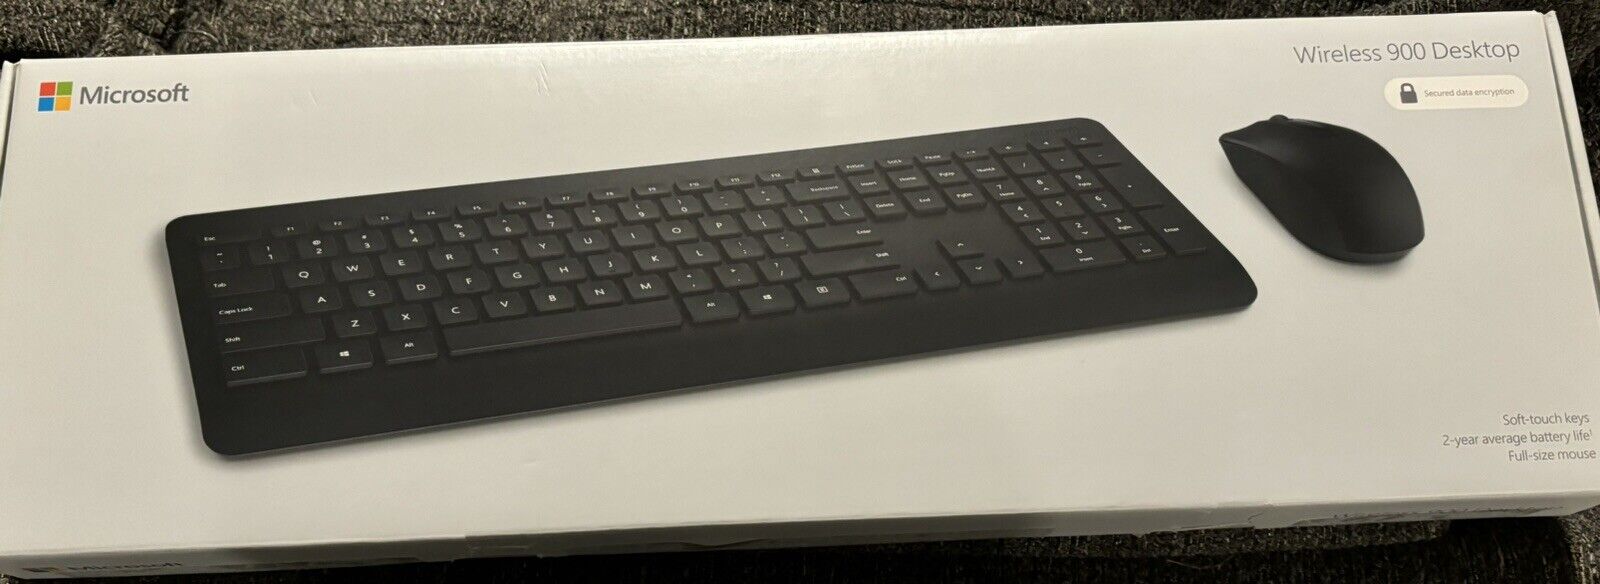 Microsoft Wireless Desktop 900 PT3-00001 QWERTY English Keyboard - Open Box -